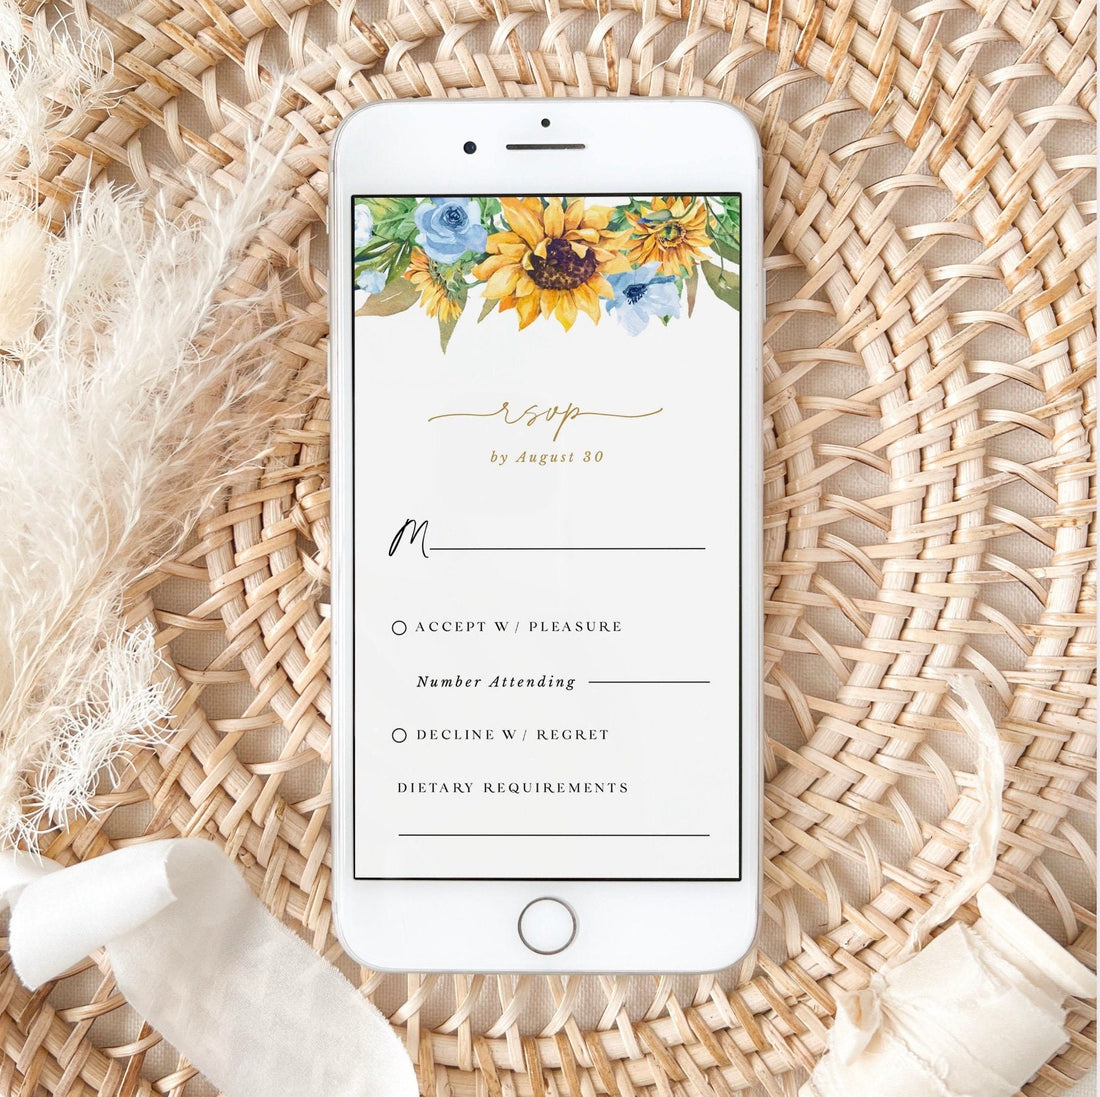 IVY Electronic Wedding Invitation Roses and Sunflowers